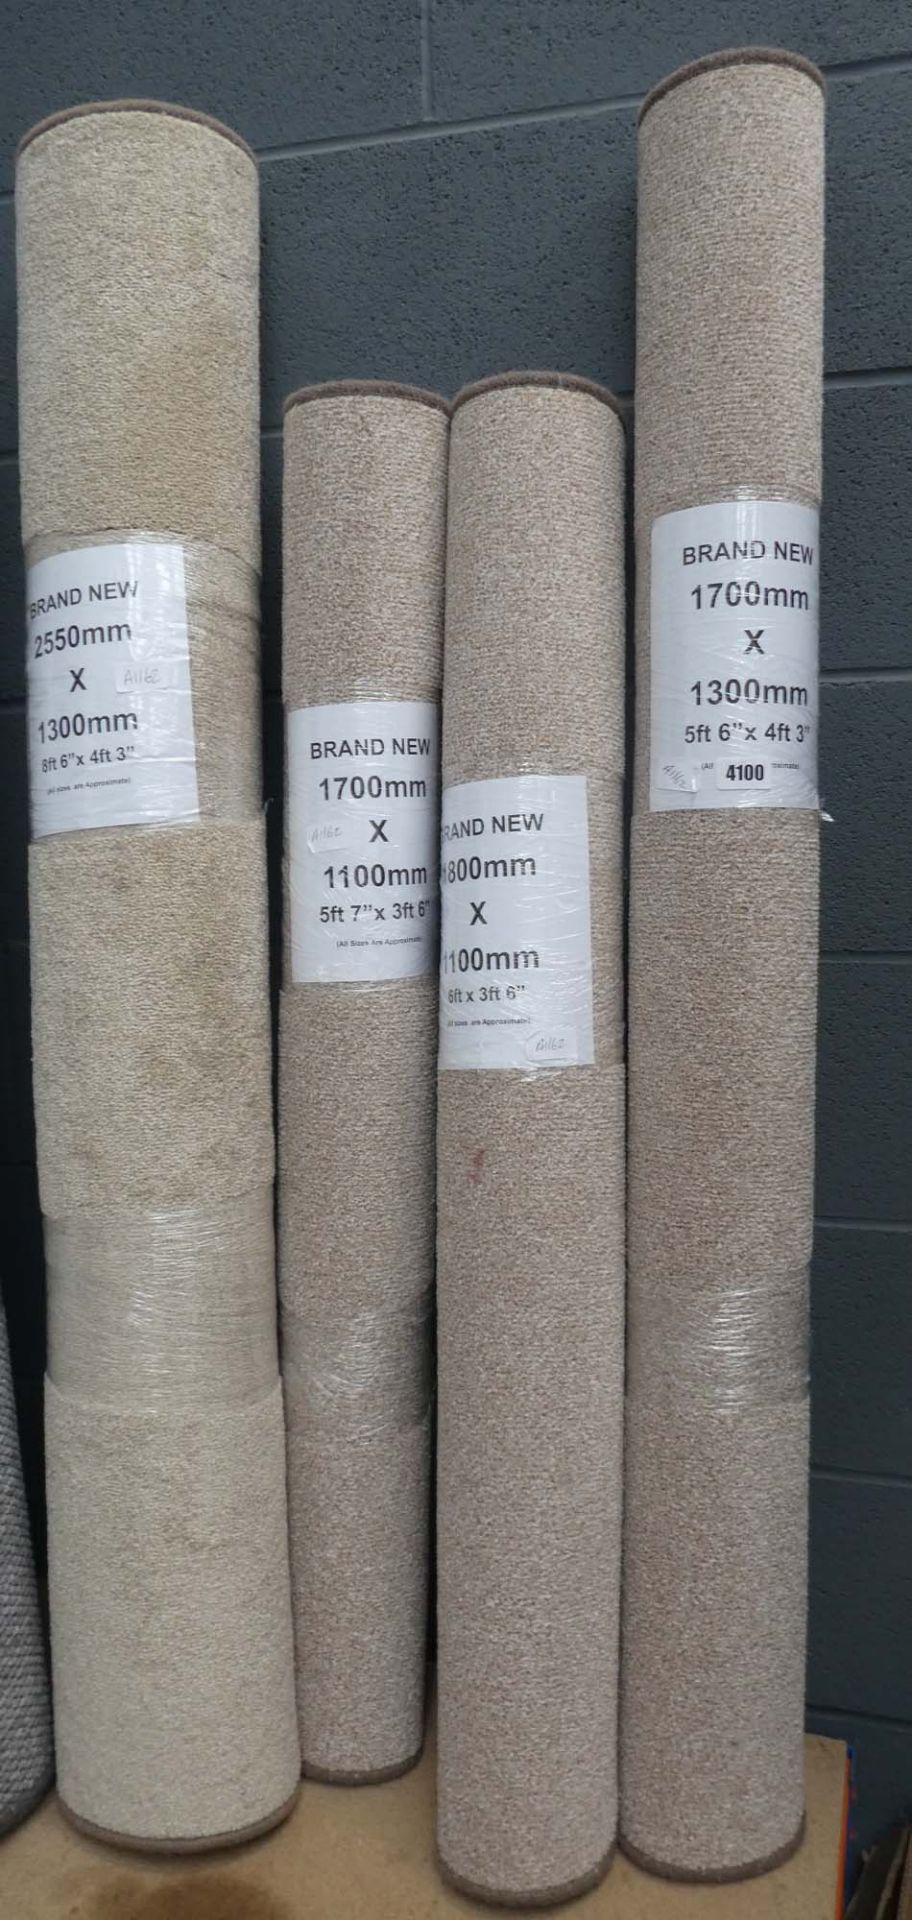 4101 4 beige rolls of carpet mats in various sizes